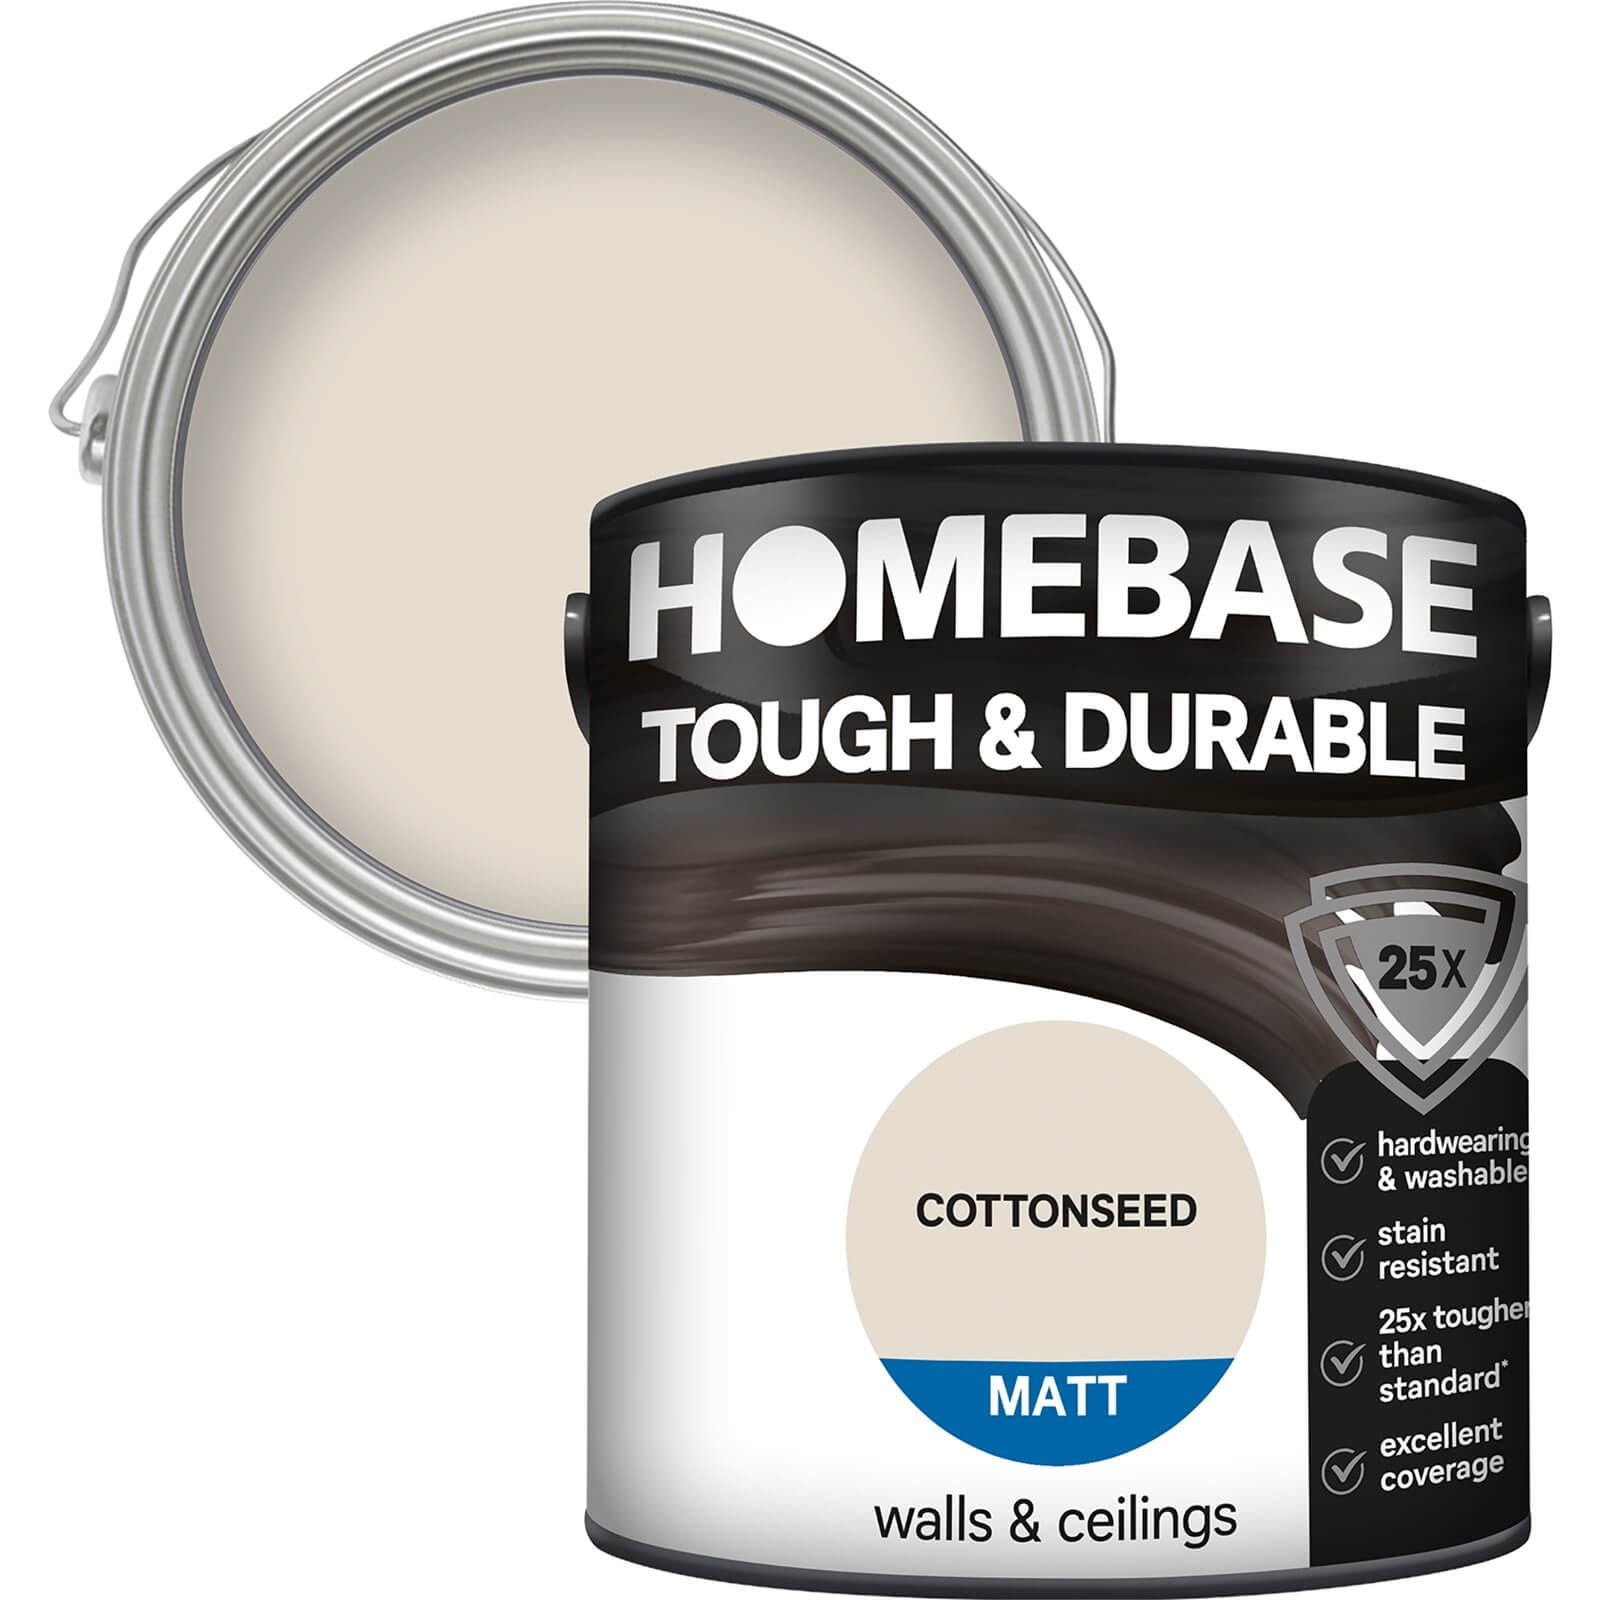 Photo of Homebase Tough & Durable Matt Paint - Cottonseed 2.5l